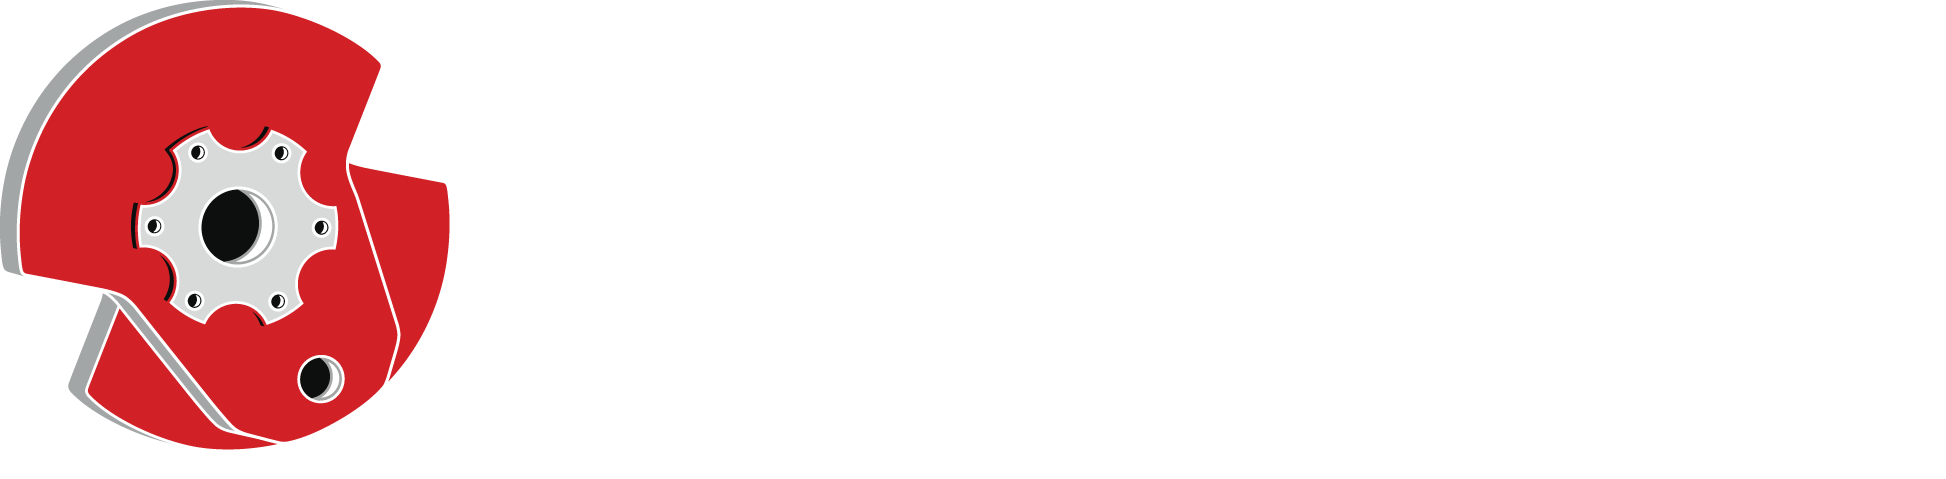 Crankshaft Studio, Inc.